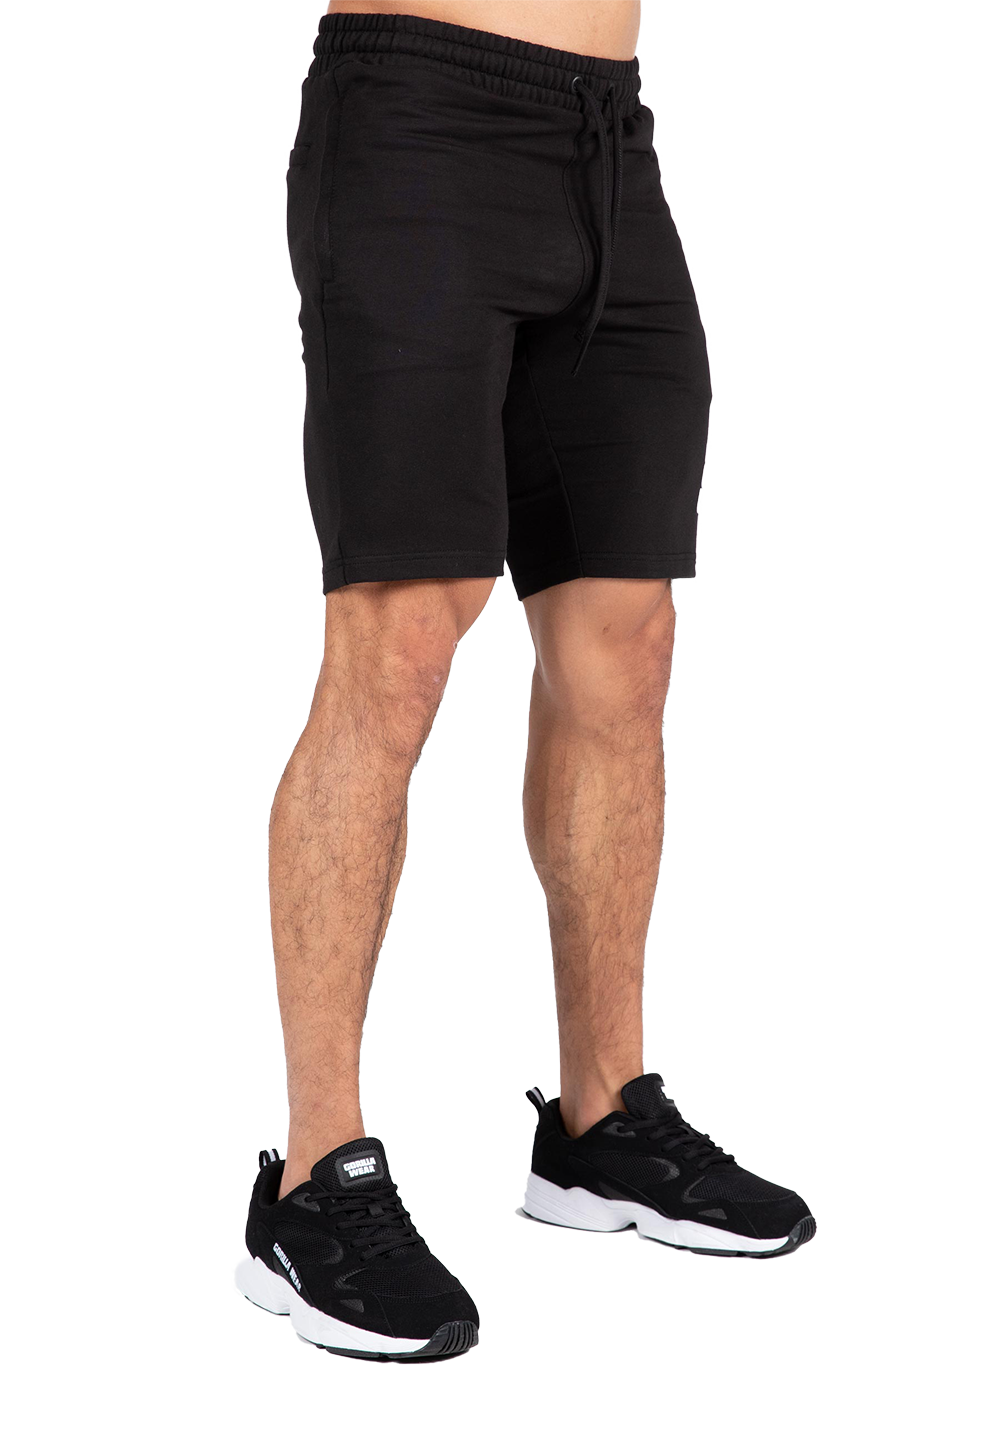 Шорты Milo Shorts – Black от Gorilla Wear